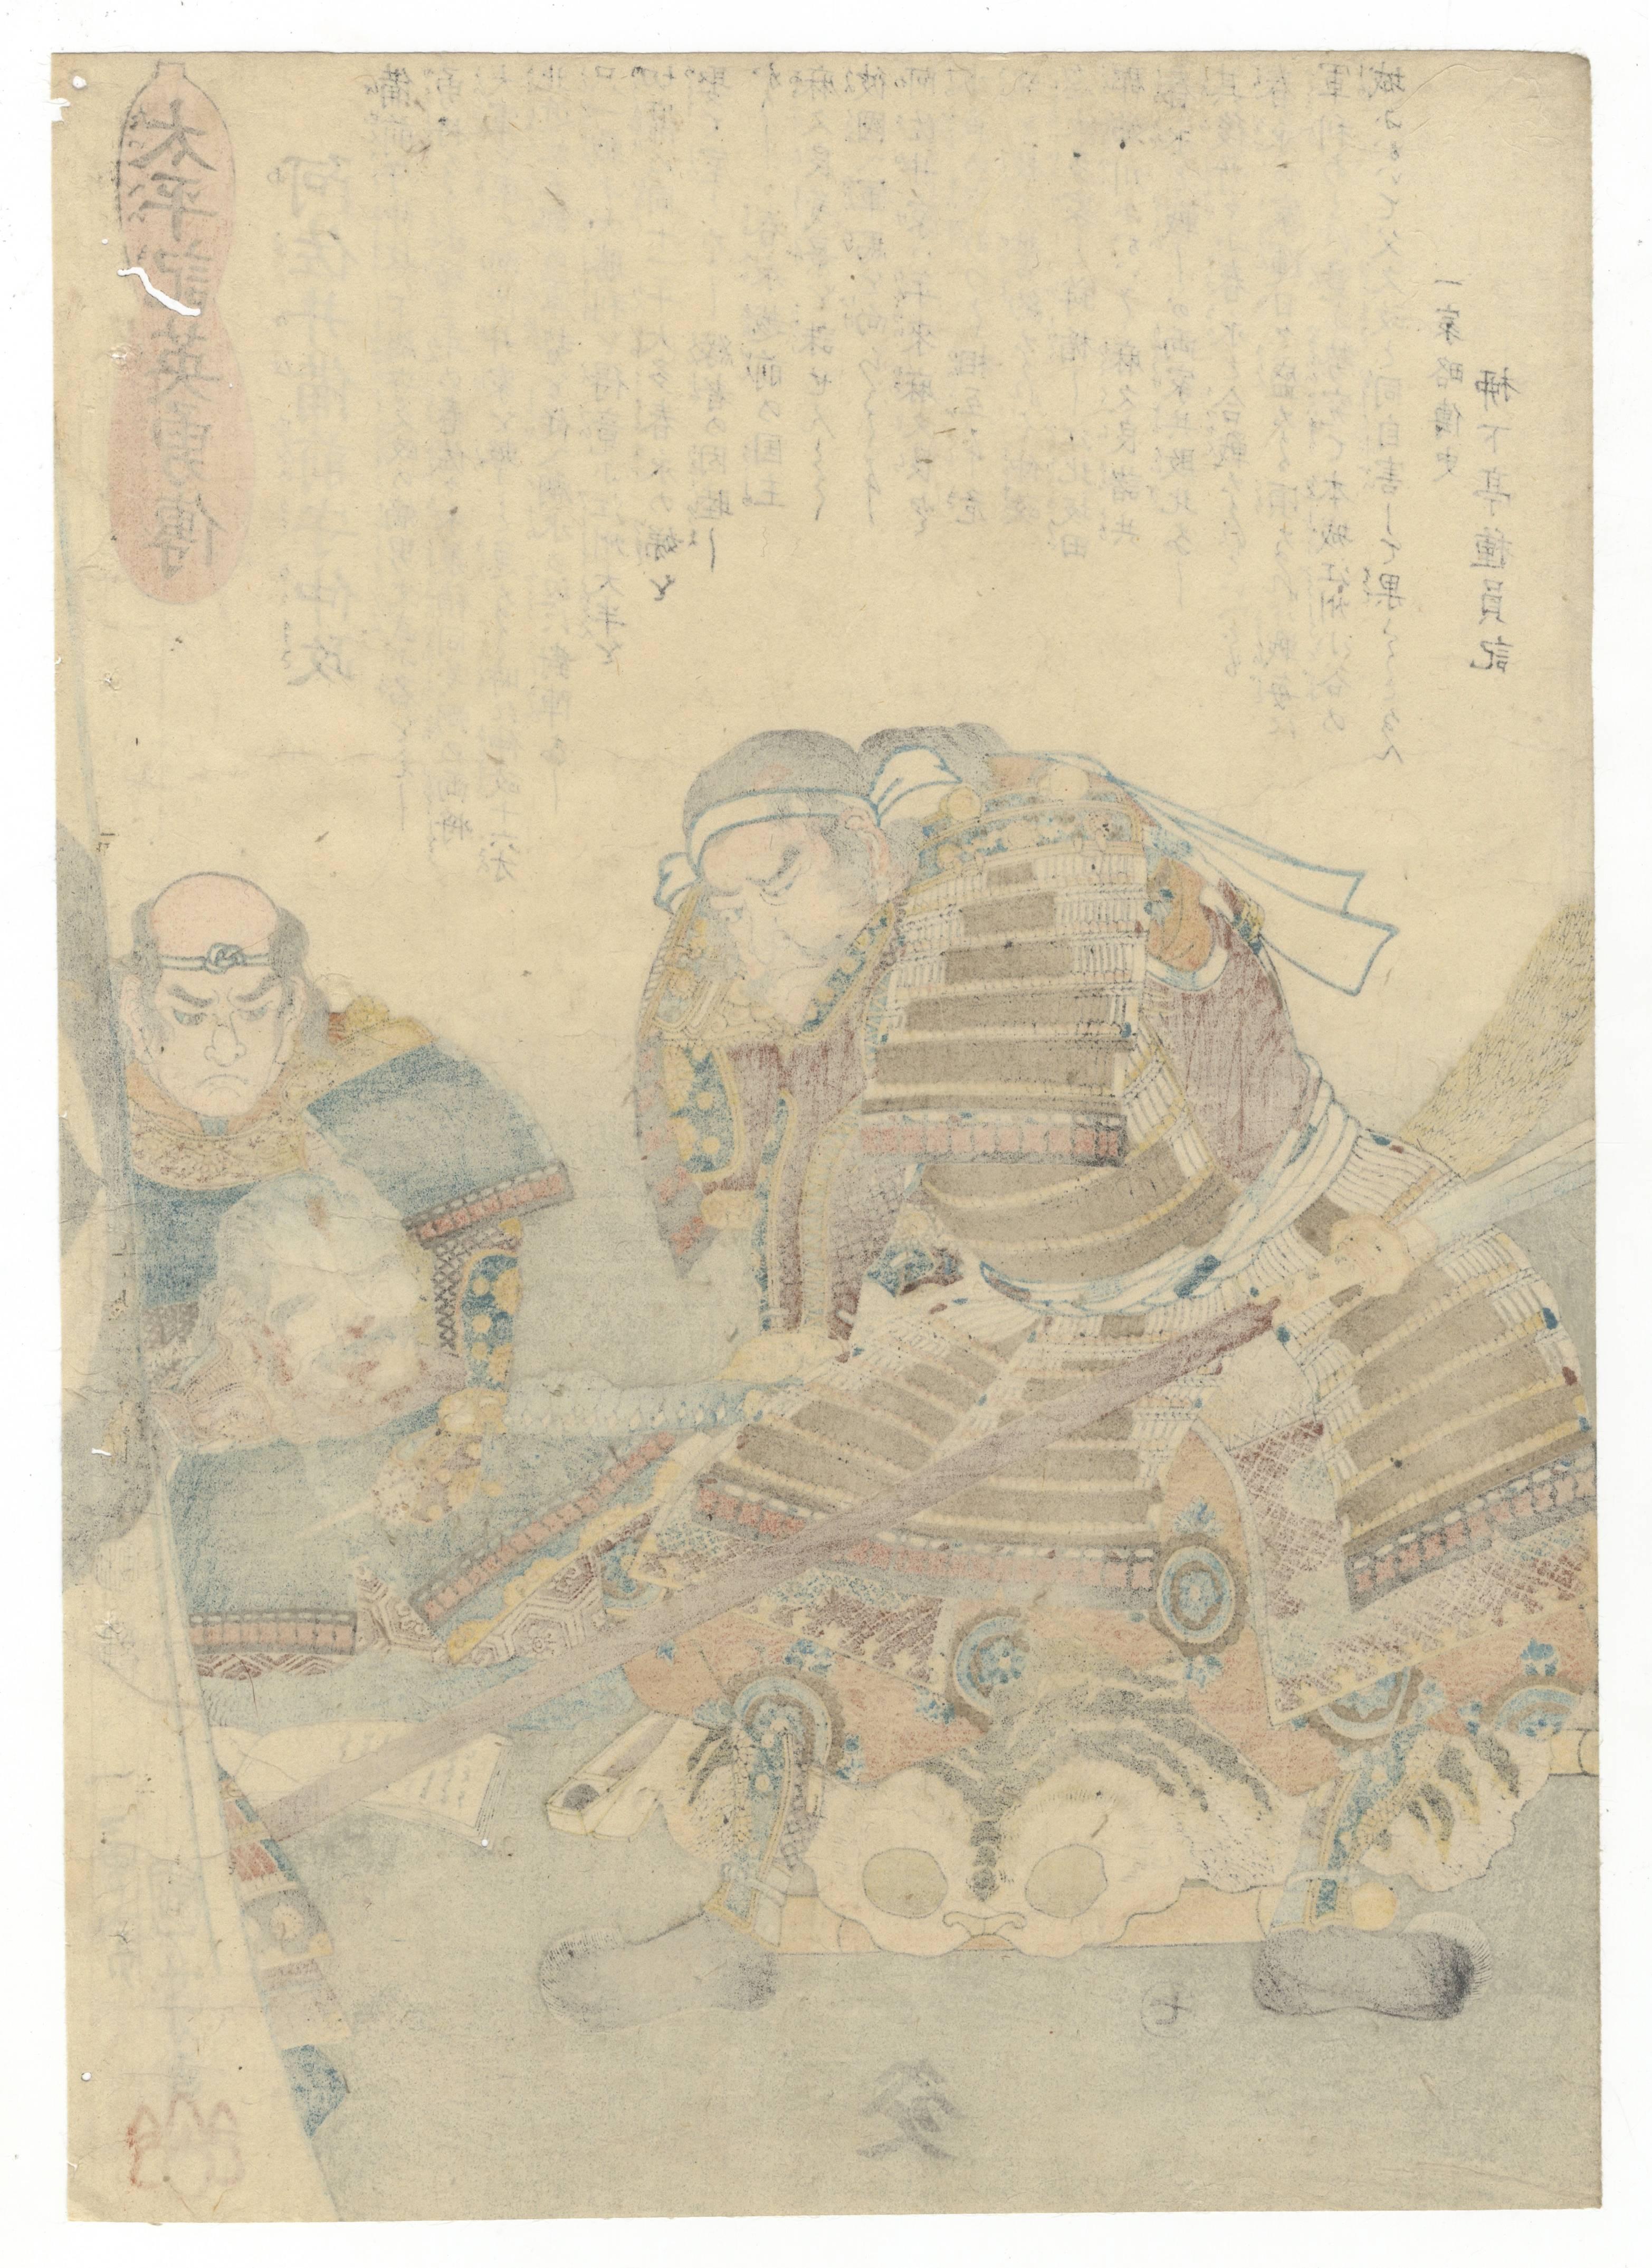 Artist: Utagawa Kuniyoshi (1797-1861)
Title: Asai Bizen-no kami Nakamasa (Asai Nagamasa, 1545-73)
Series: Heroes of the Grand Pacification (Taiheiki eiyu den)
Publisher: Yamamoto-ya Heikichi 

Asai Nagamasa in full military equipment is sitting